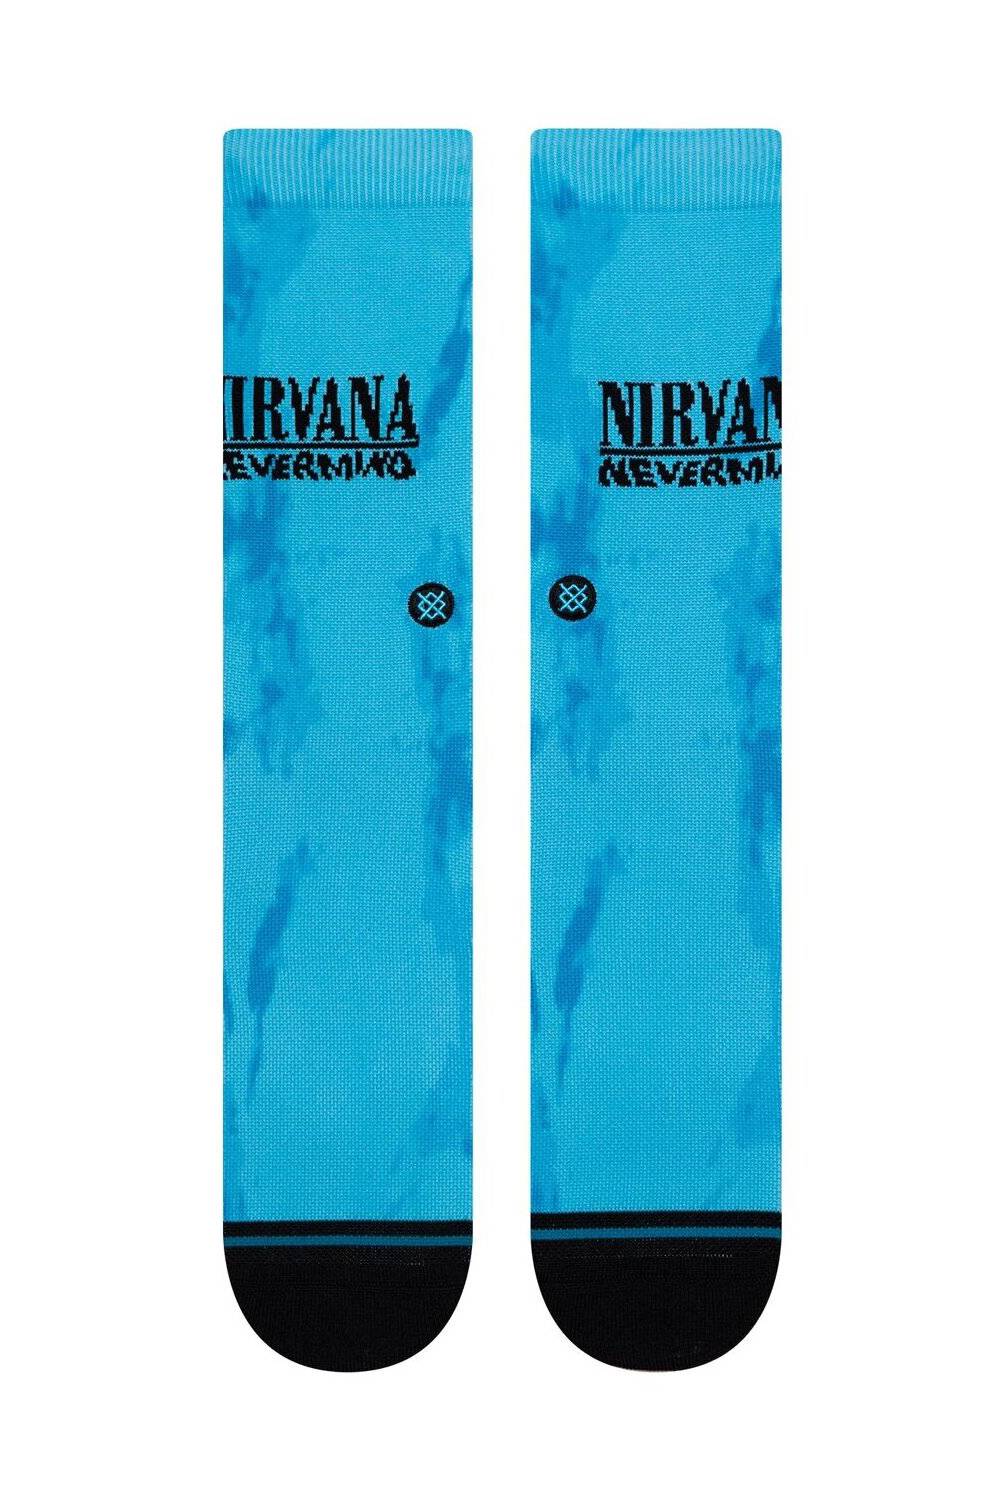 STANCE - Calceta Stance Nirvana Nevermind